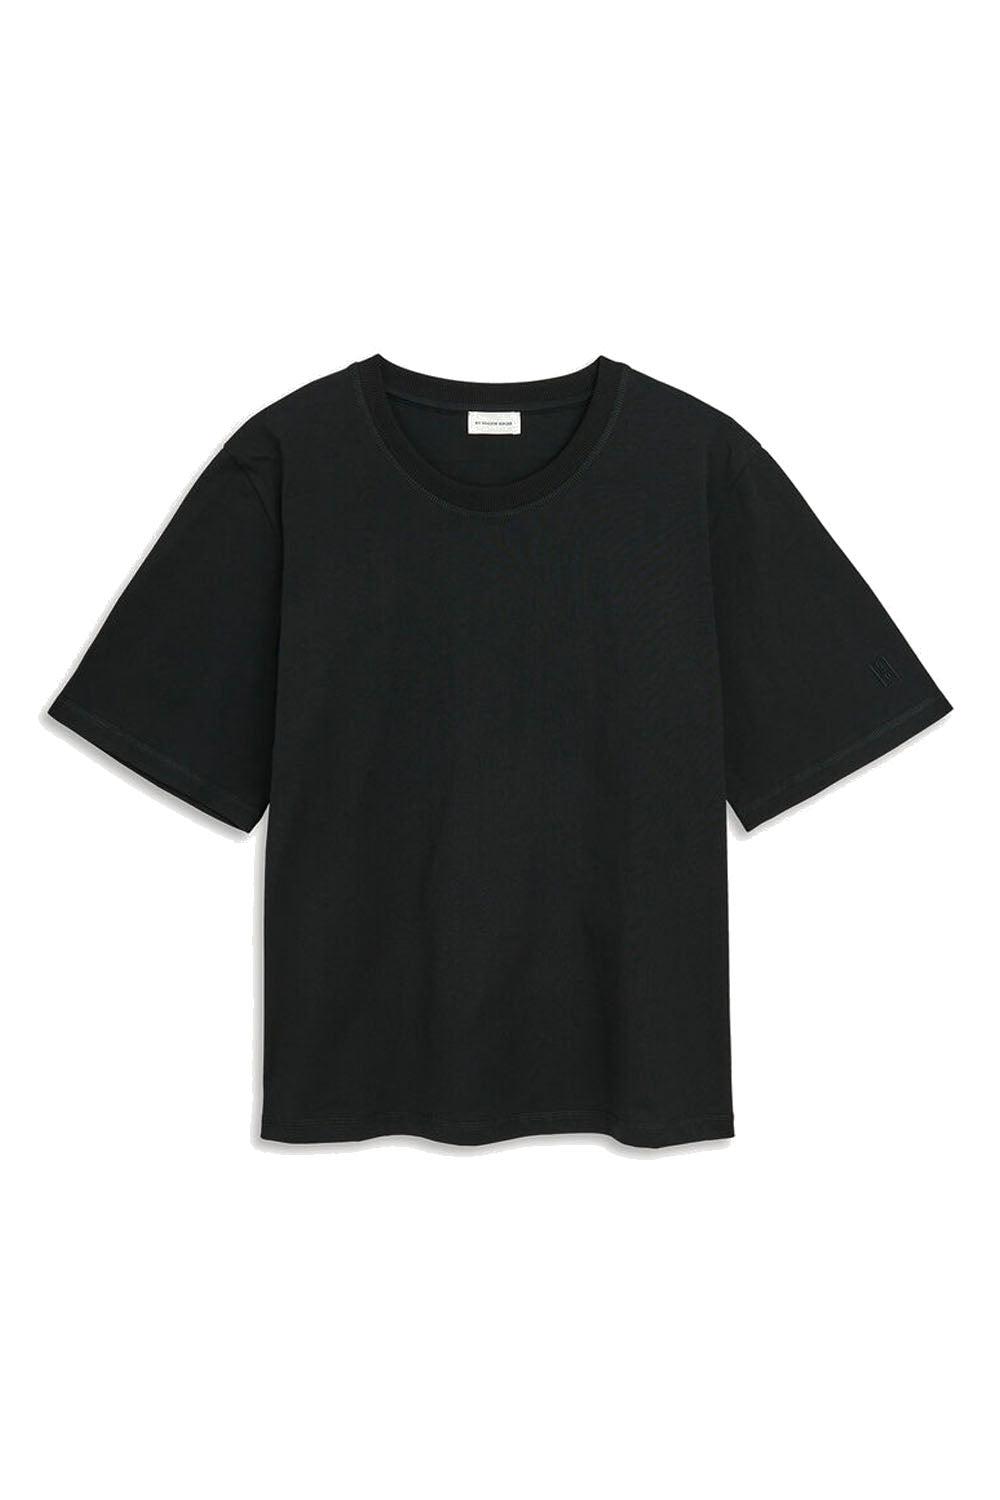 Hedil T-shirt Black